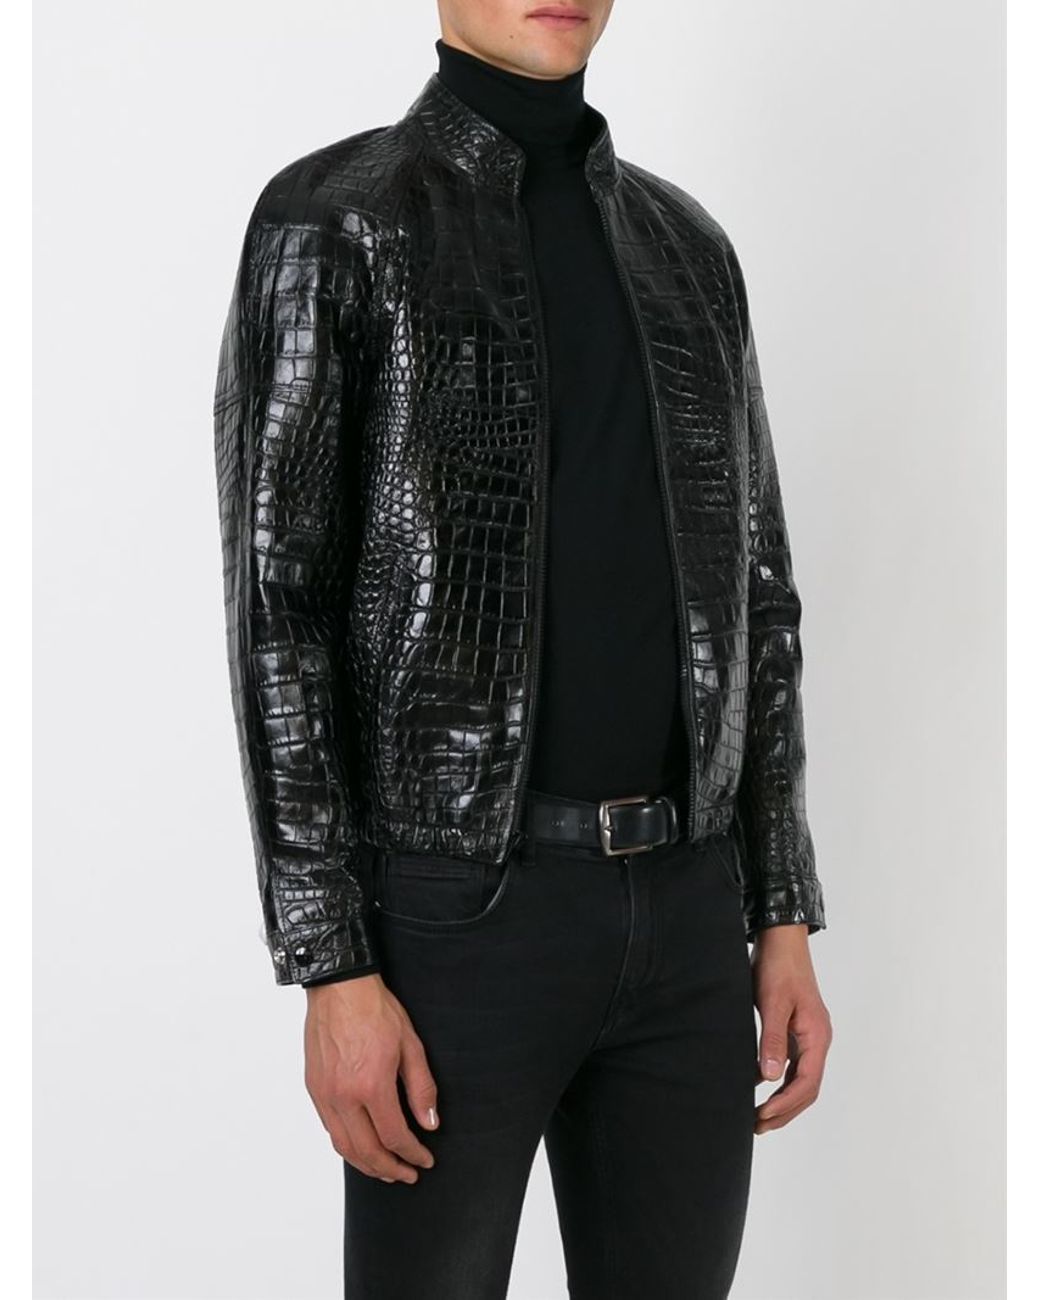 Saint Laurent Crocodile Embossed Jacket in Black for Men | Lyst